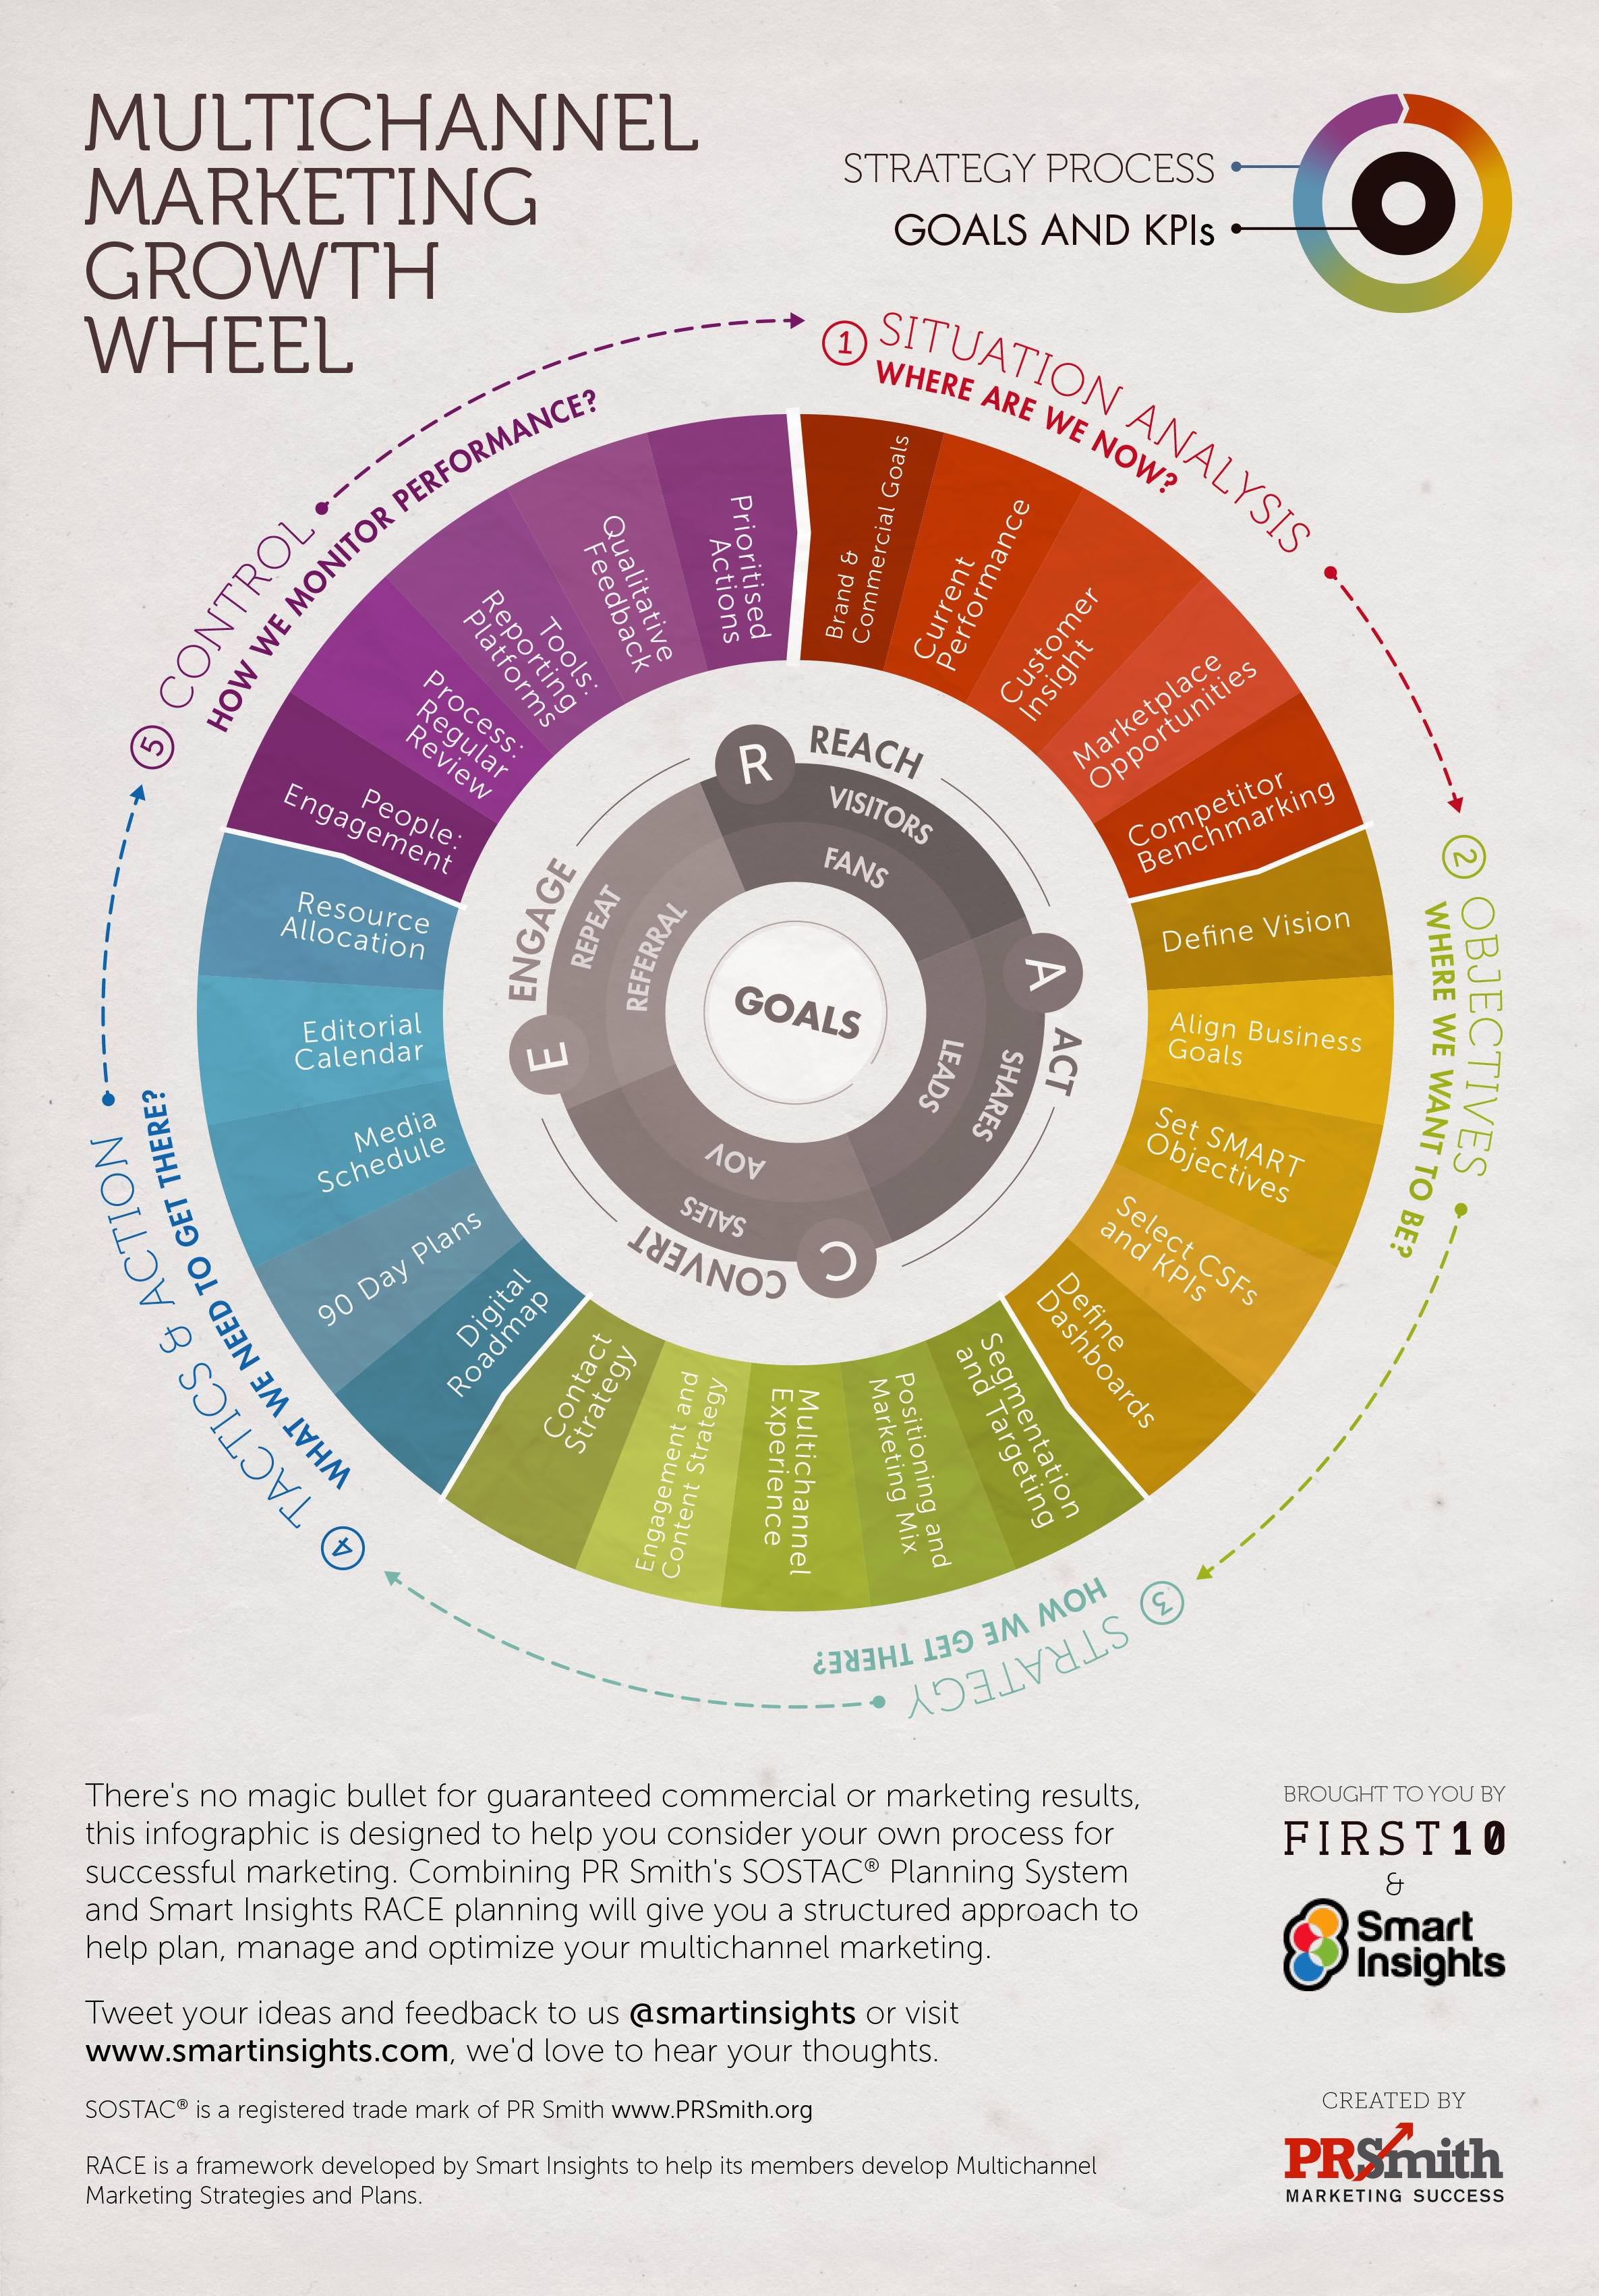 SOSTAC RACE Marketing Growth Wheel Smart Insights Prsmith1